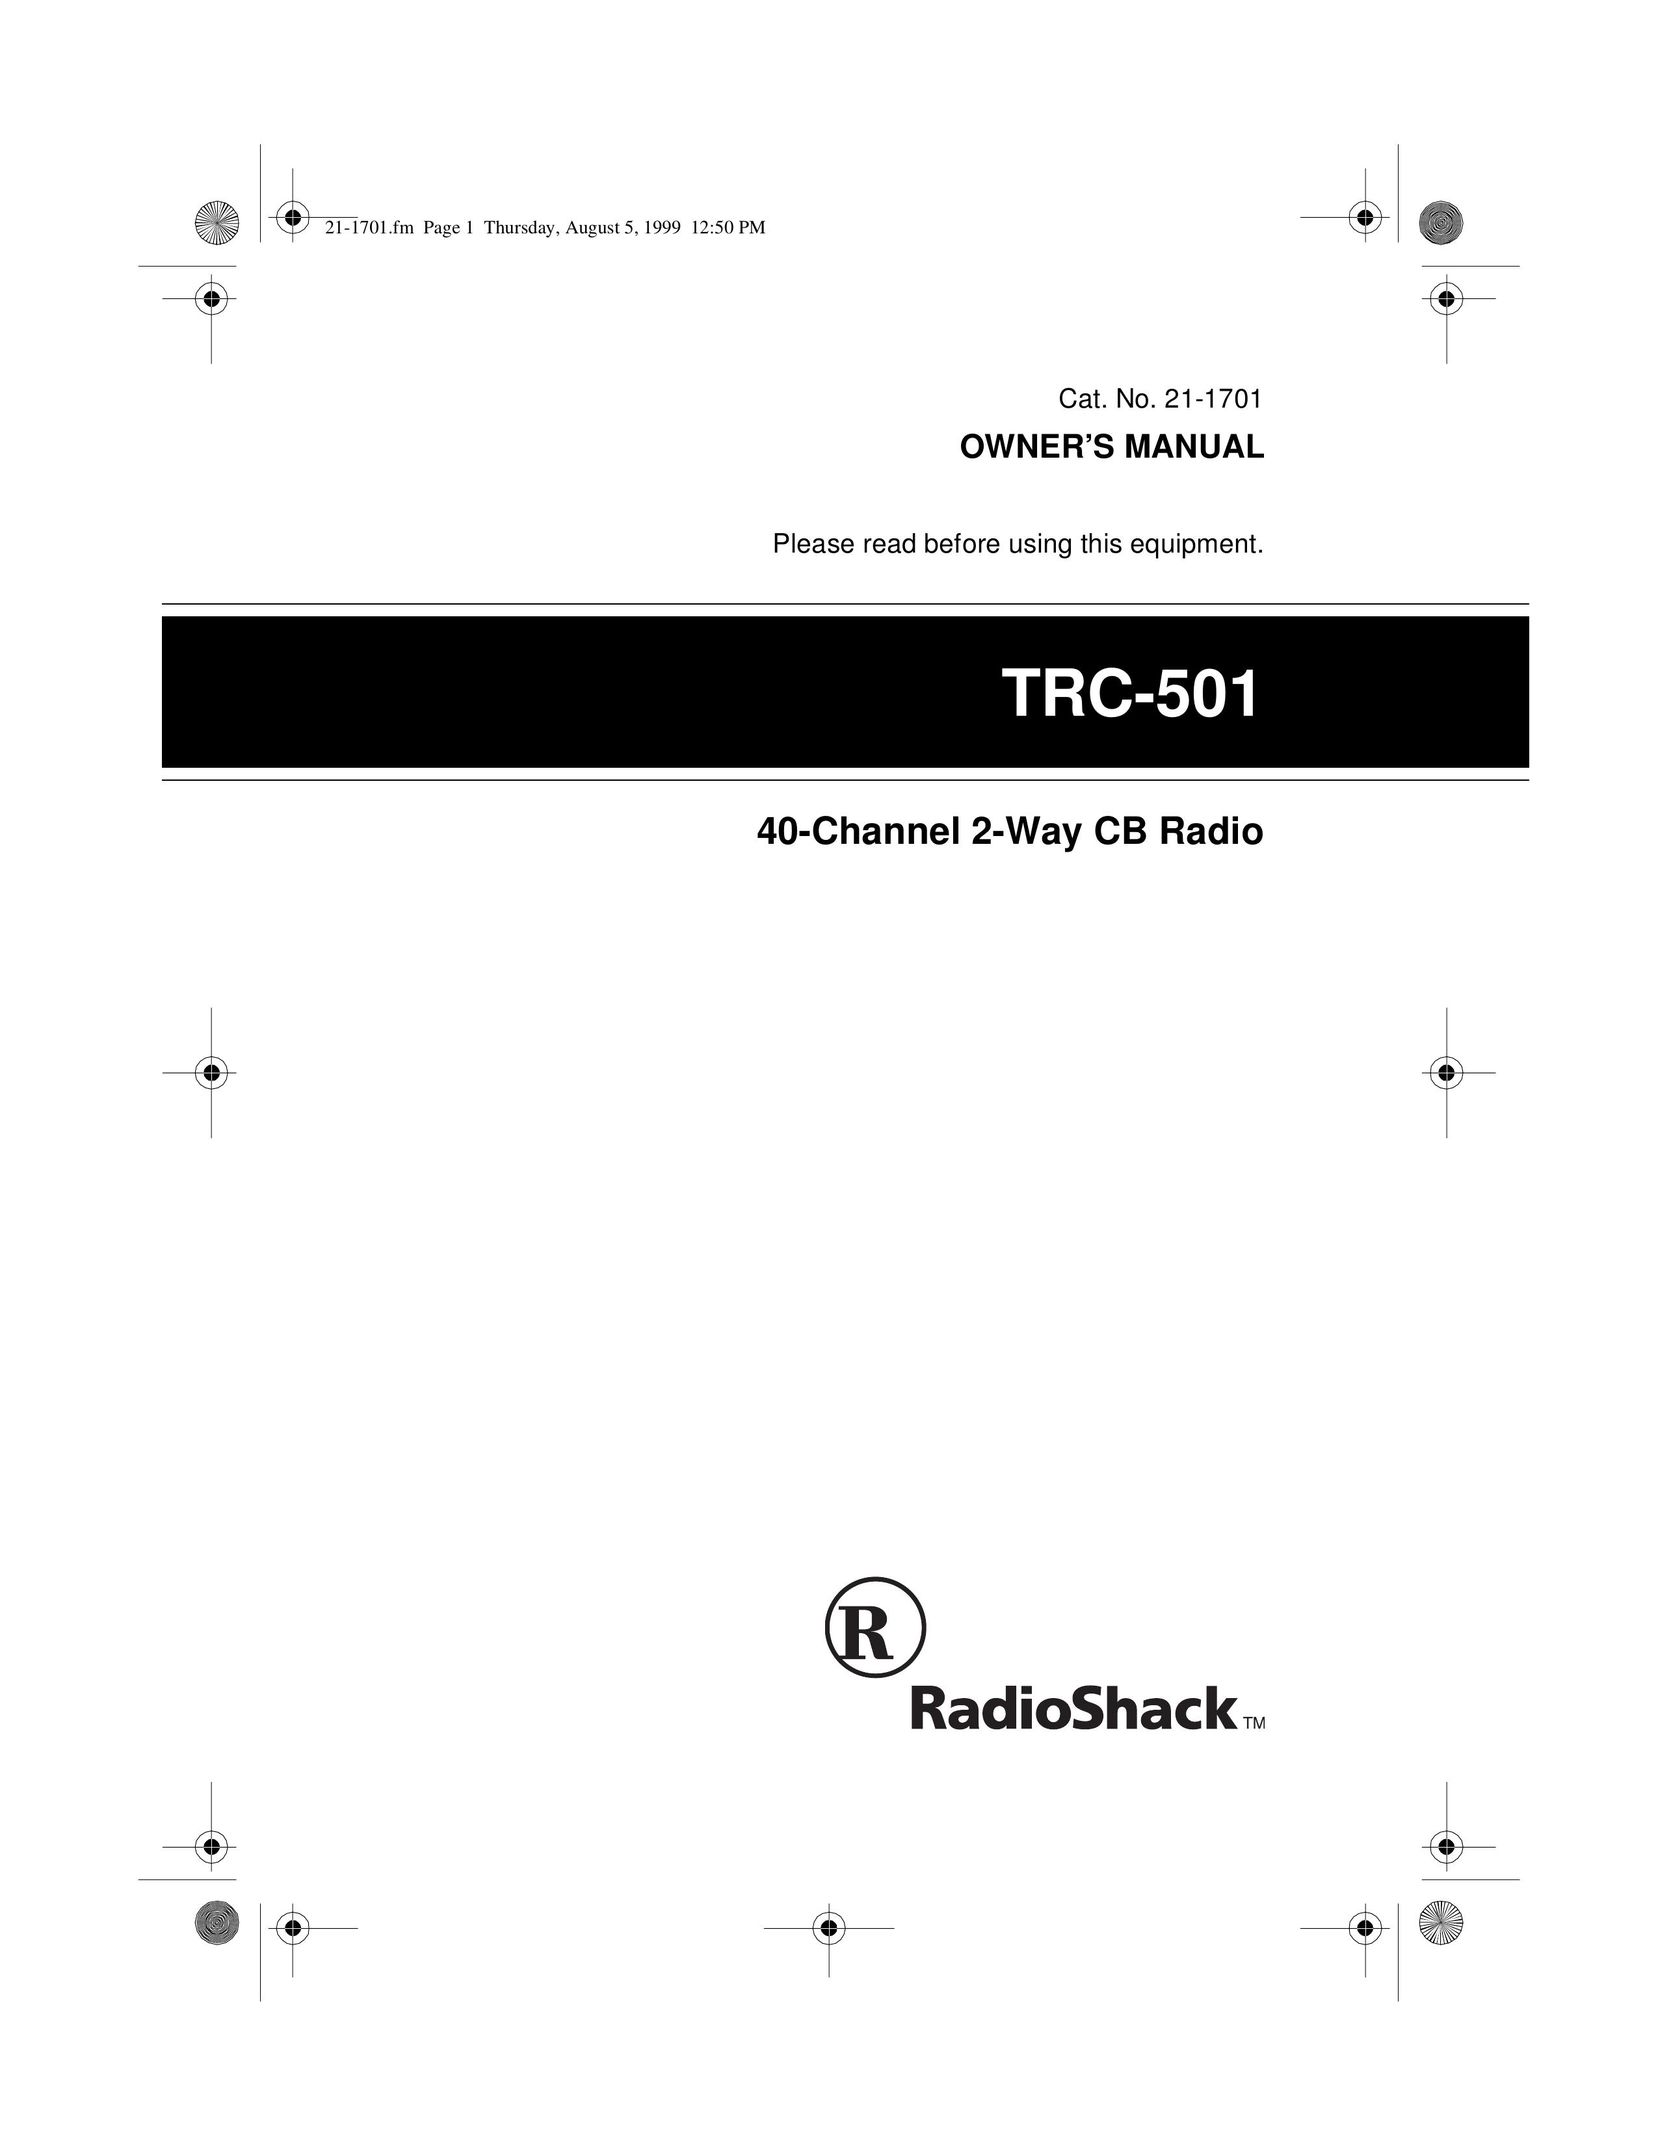 Radio Shack TRC-501 Two-Way Radio User Manual